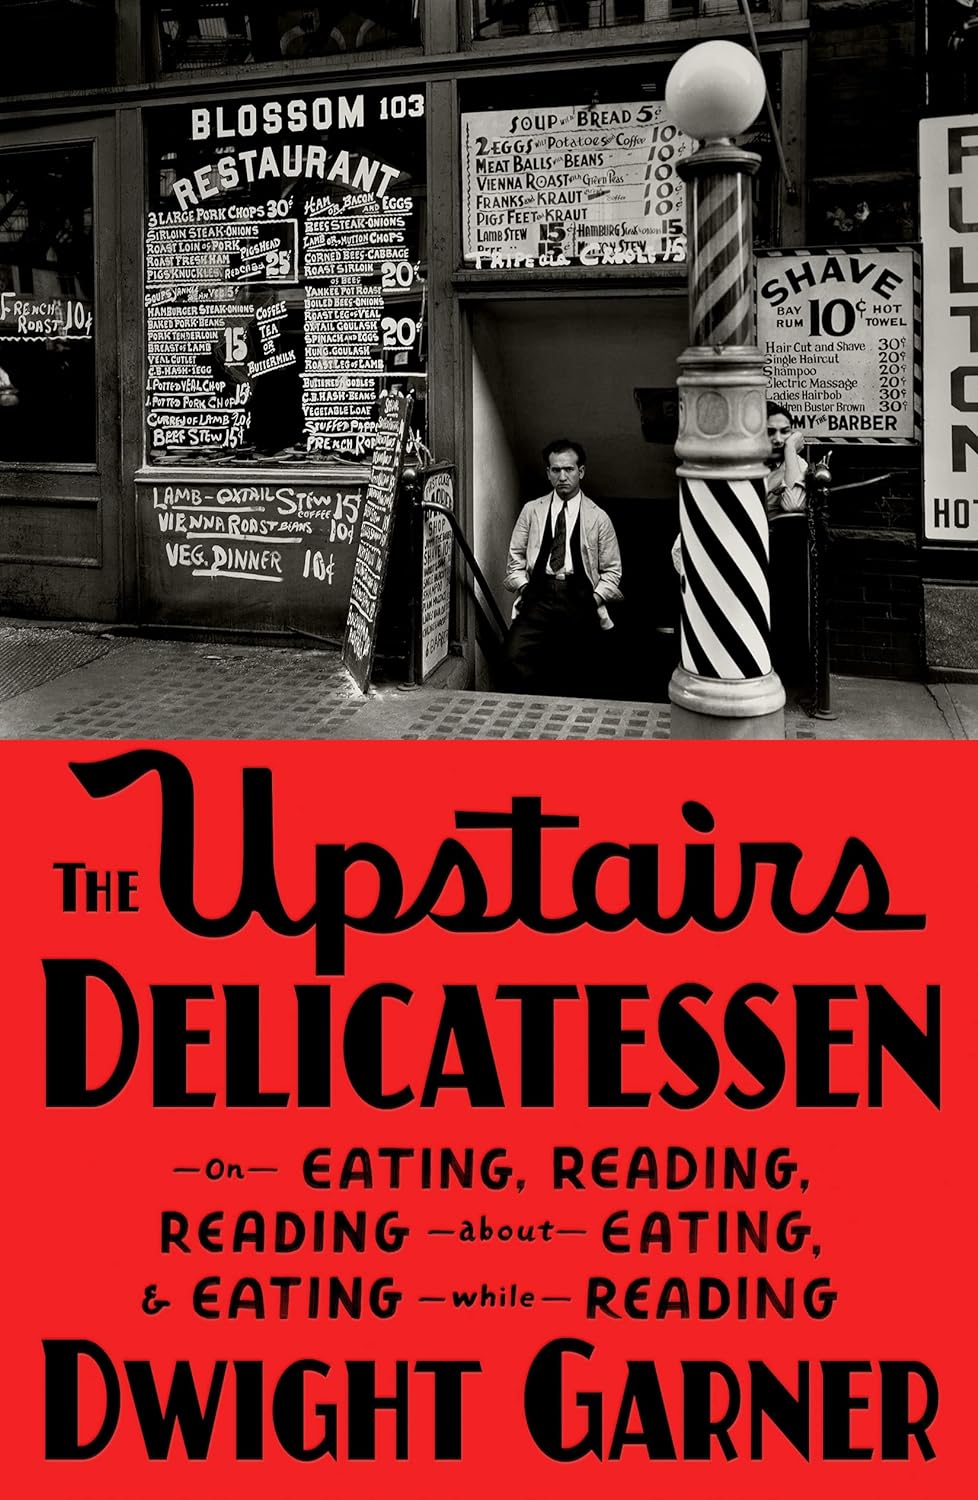 The Upstairs Delicatessen: On Eating, Reading, Reading About Eating, and Eating While Reading by Dwight Garner